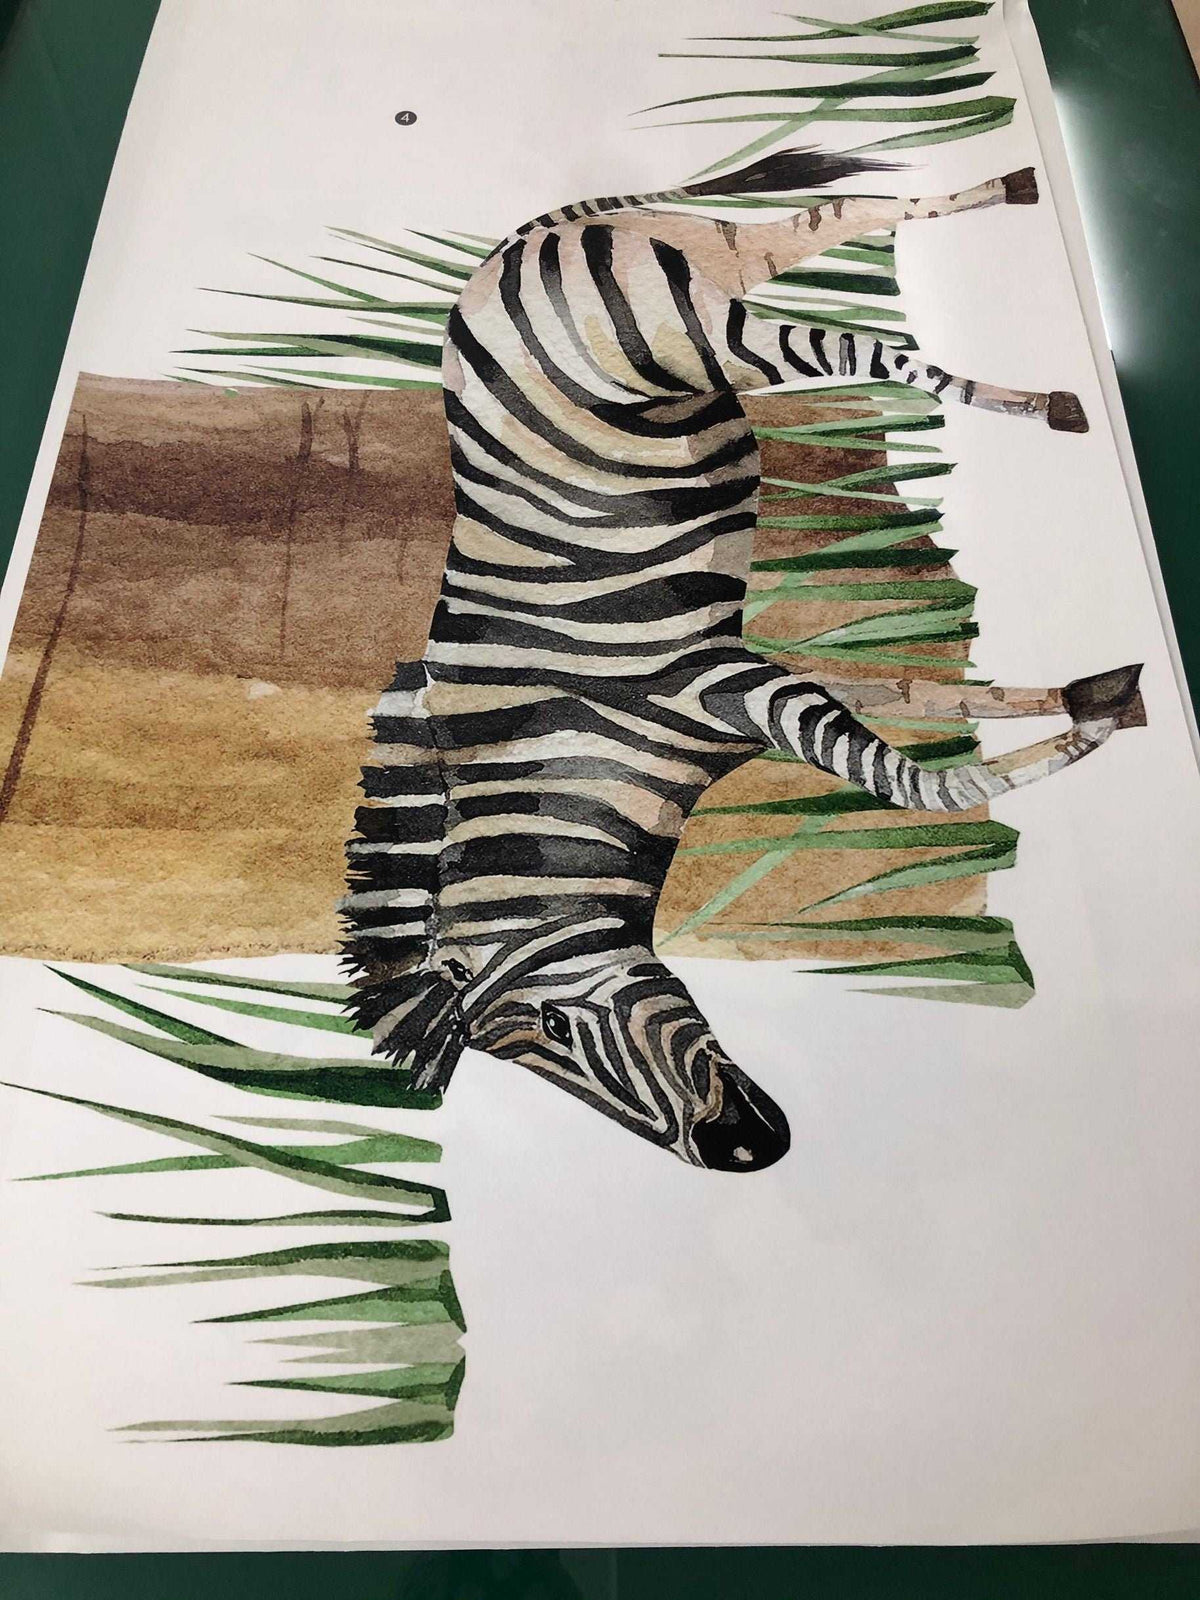 Large Forest Animal Wall Sticker For Kids Rooms Giraffe Elephant Zebra Kids Stickers Home Decoration Print Art Vinyl Decal